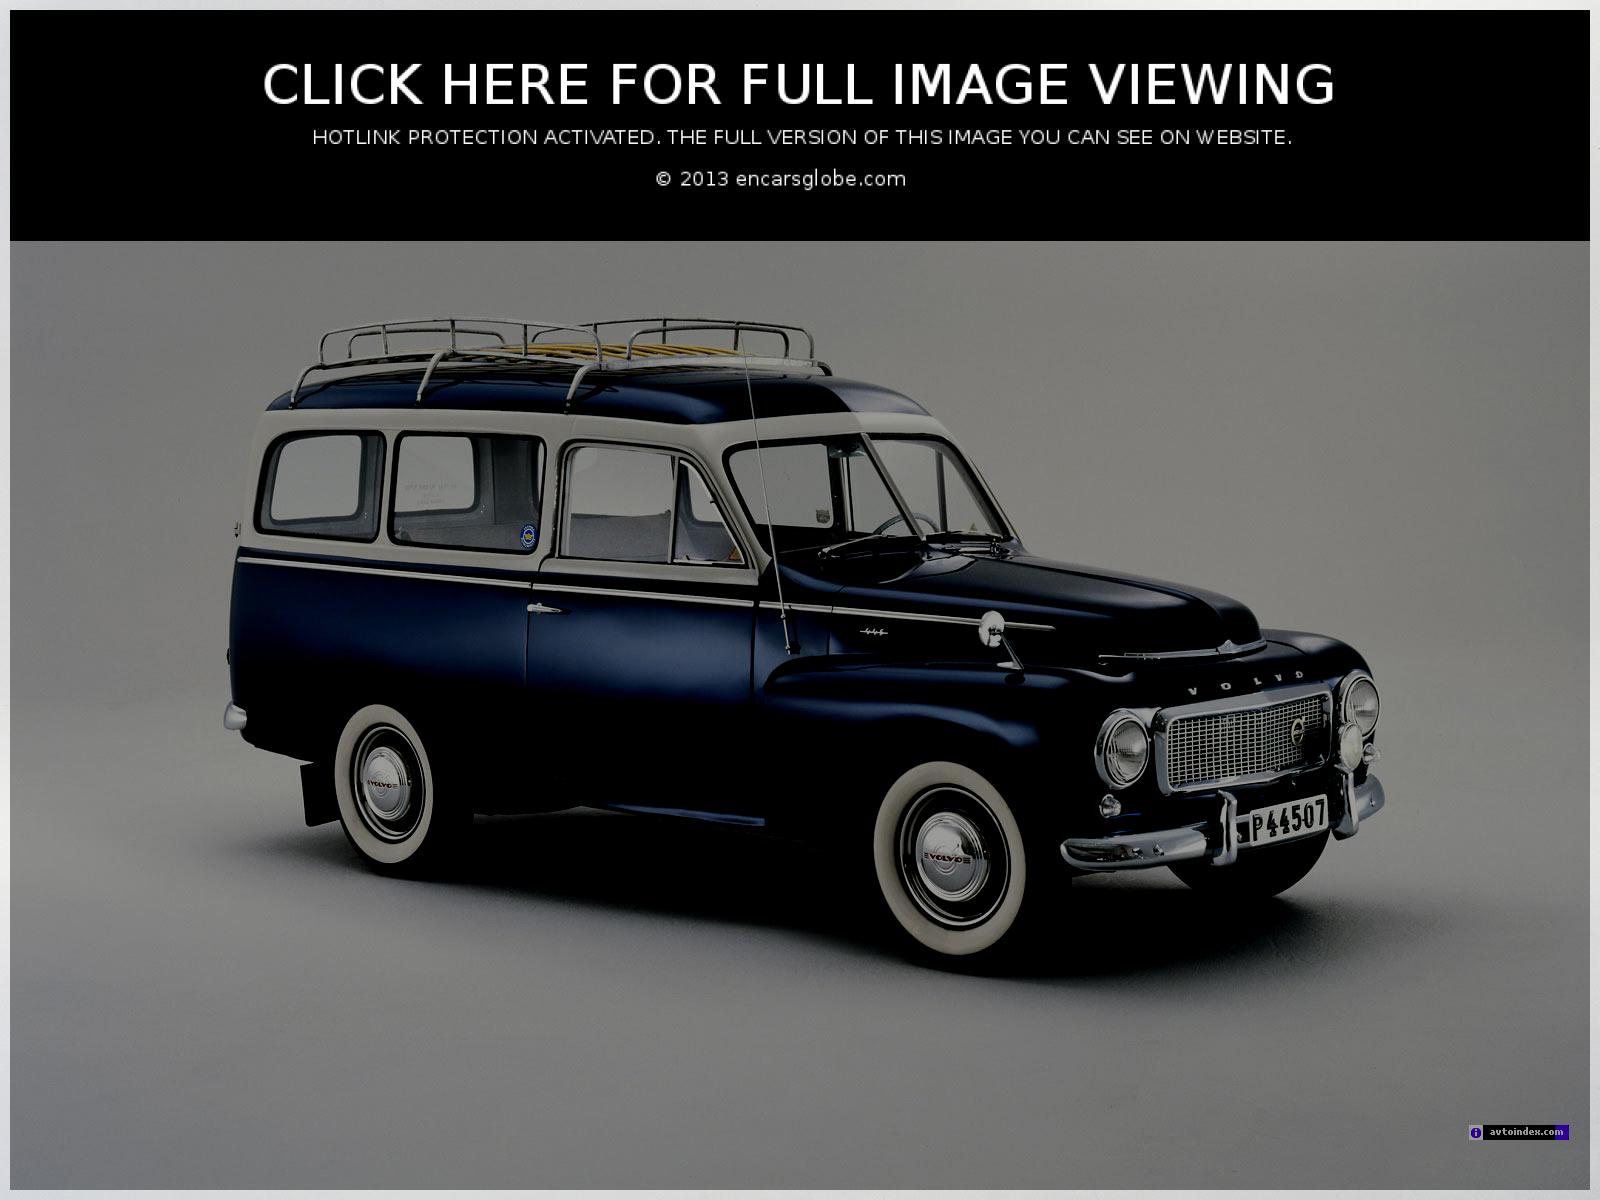 Gallery of all models of Volvo: Volvo LV290, Volvo B10M-61 Mark III